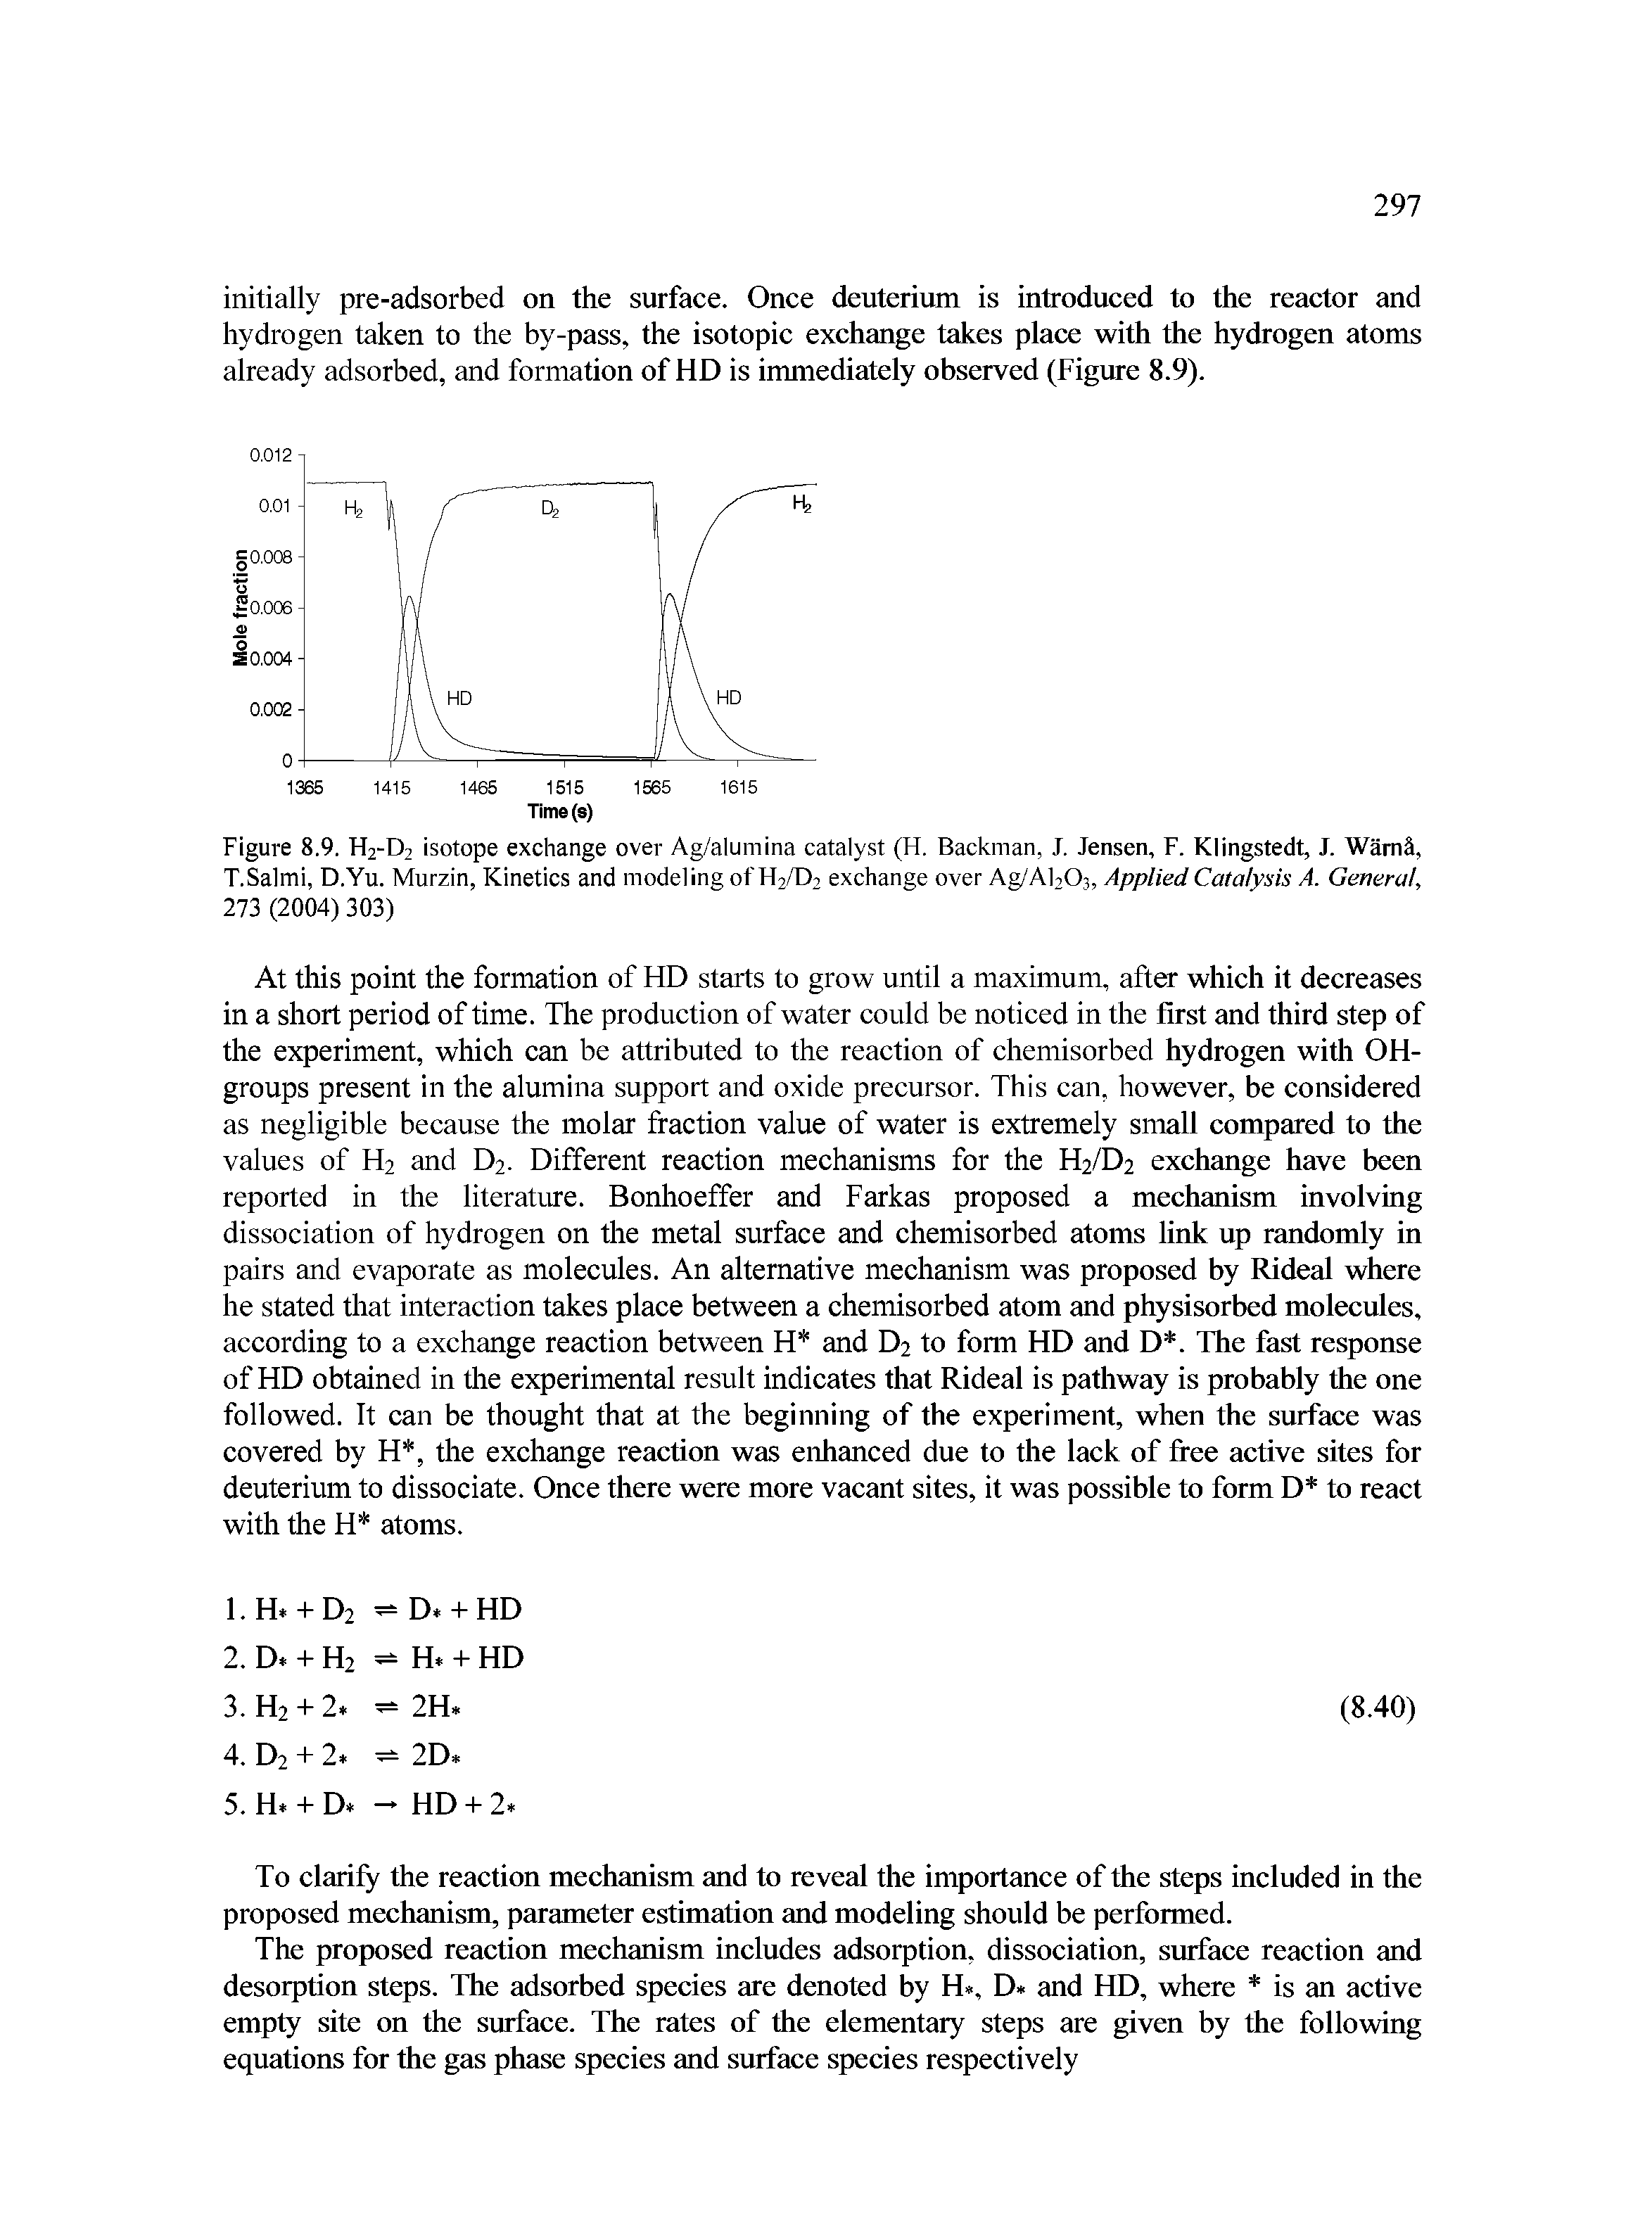 Figure 8.9. H2-D2 isotope exchange over Ag/alumina catalyst (H. Backman, J. Jensen, F. Klingstedt, J. WarnJ, T.Salmi, D.Yu. Murzin, Kinetics and modeling of H2/D2 exchange over Ag/Al203, Applied Catalysis A. General, 273 (2004) 303)...